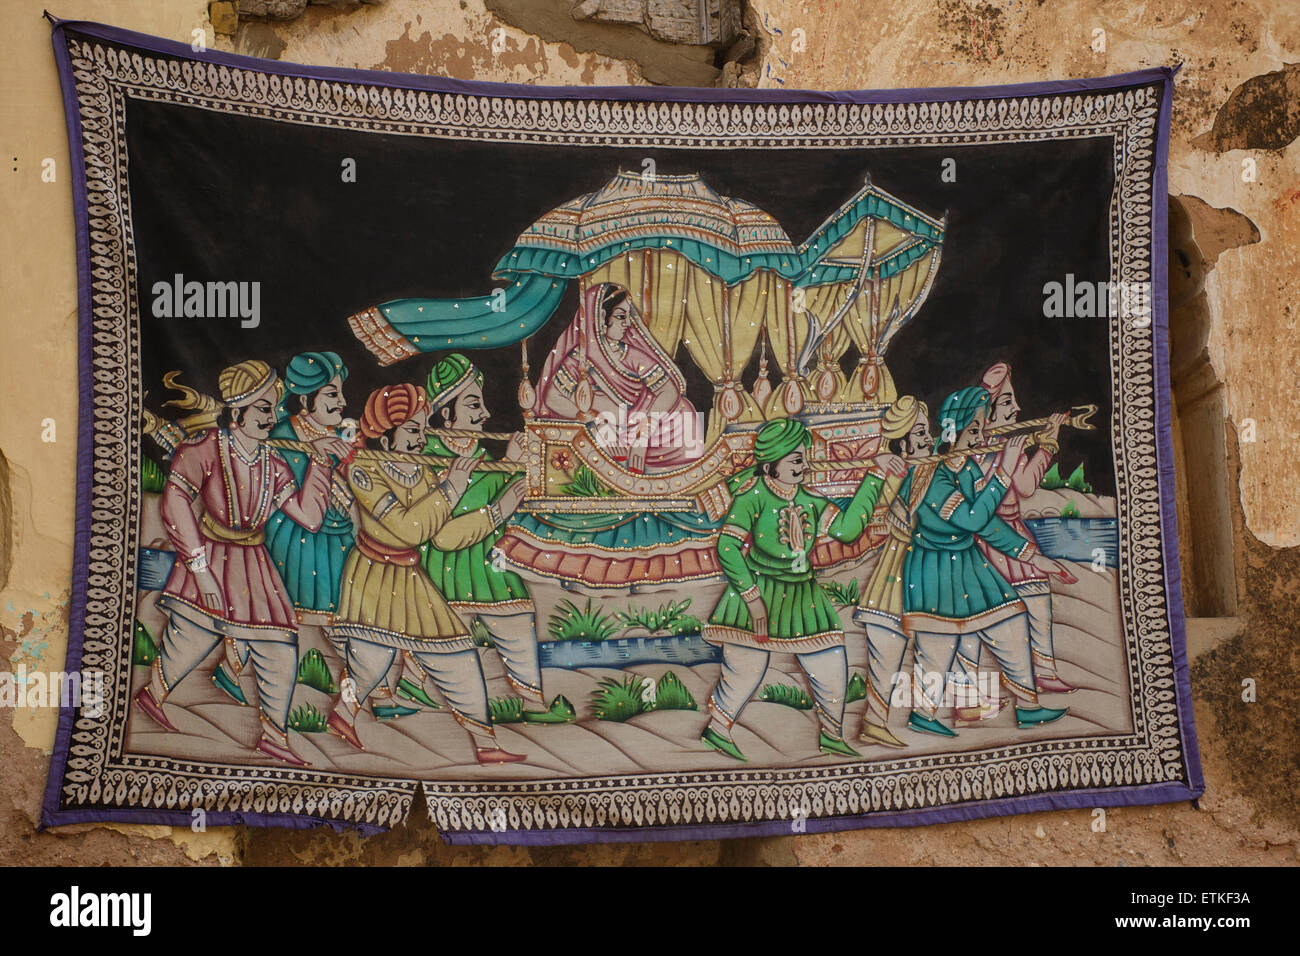 Indische Textilindustrie Souvenir. Mandawa, Shekawati Region, Rajasthan Indien Stockfoto